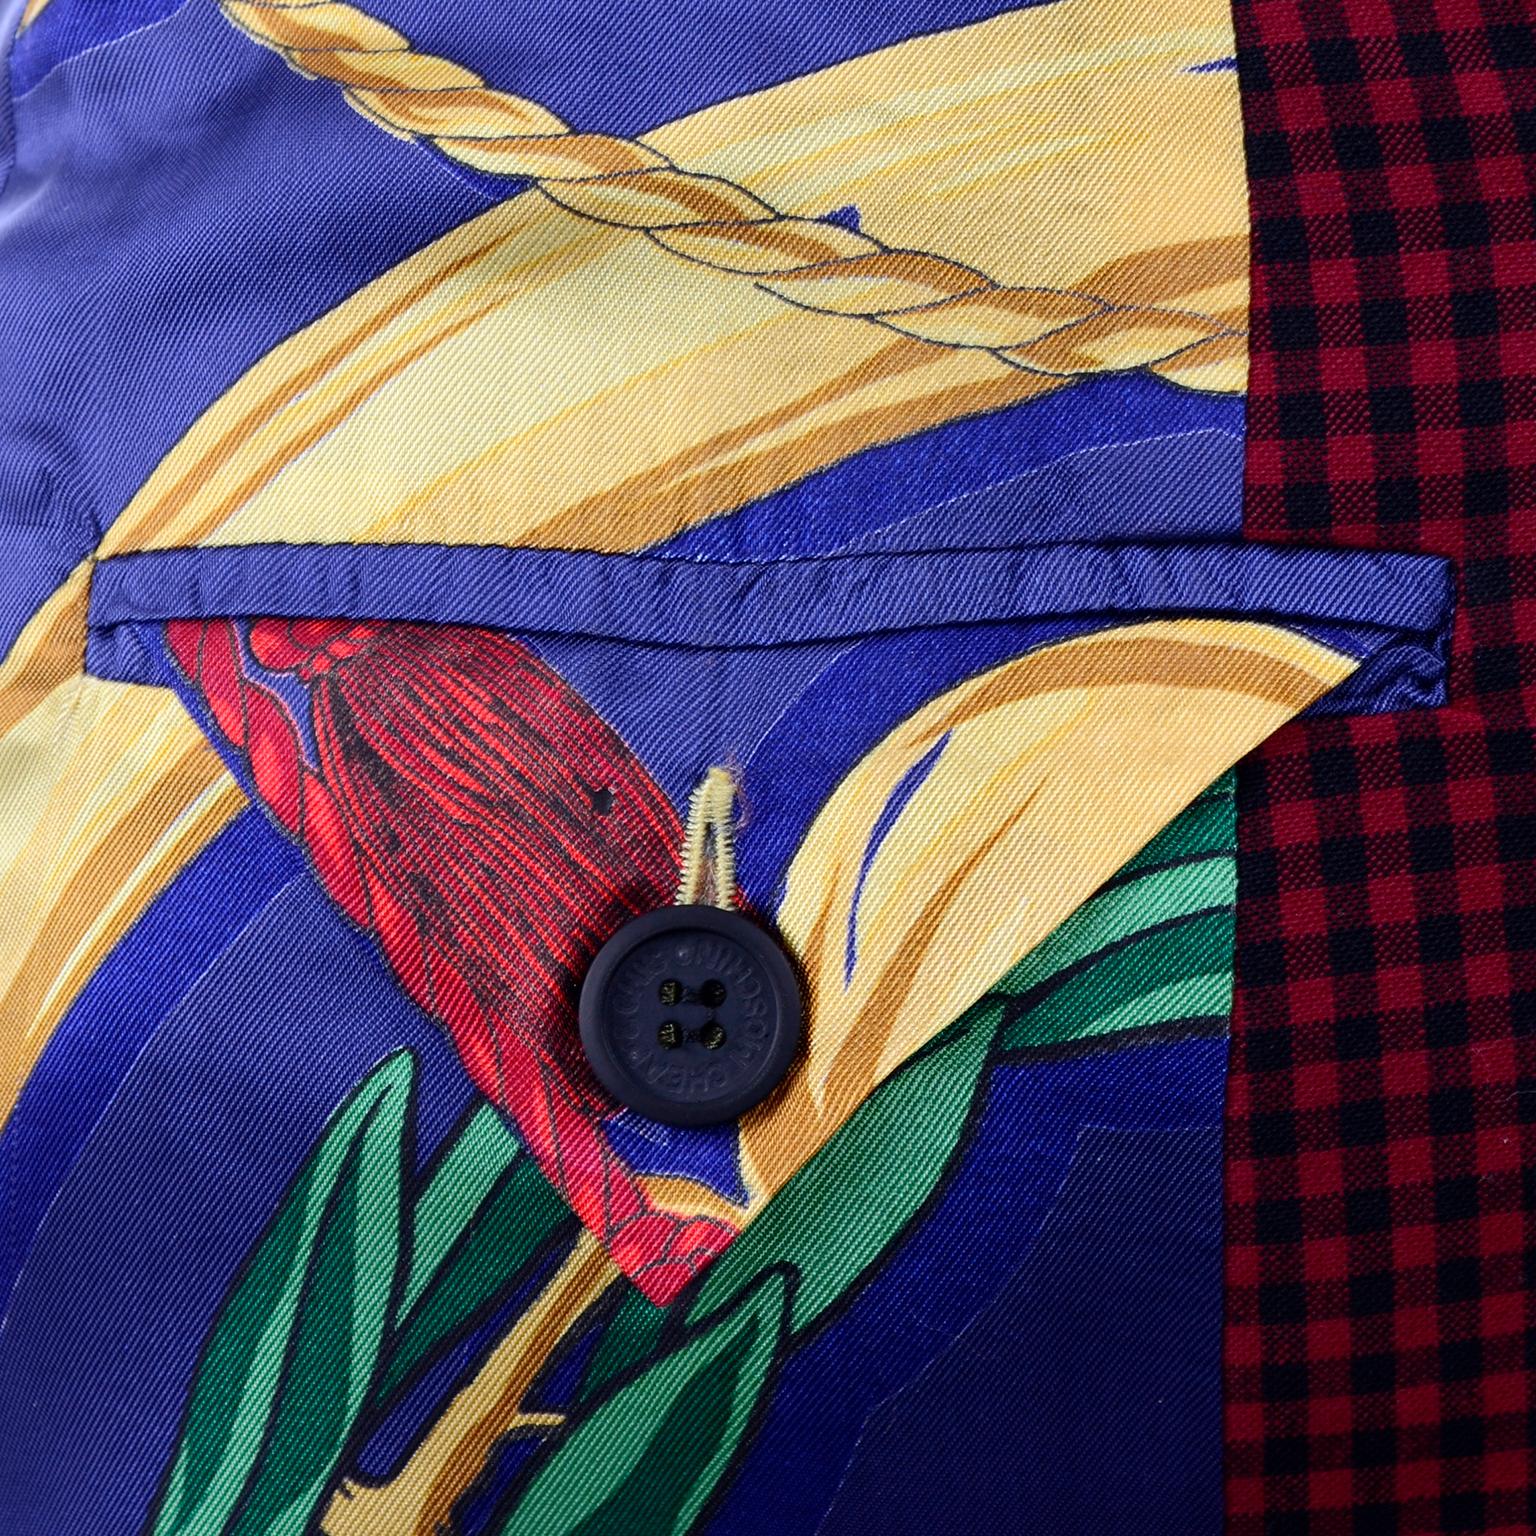 Vintage Franco Moschino Pret a Porter Nautical Print Skirt w/ Fans & Vines 5